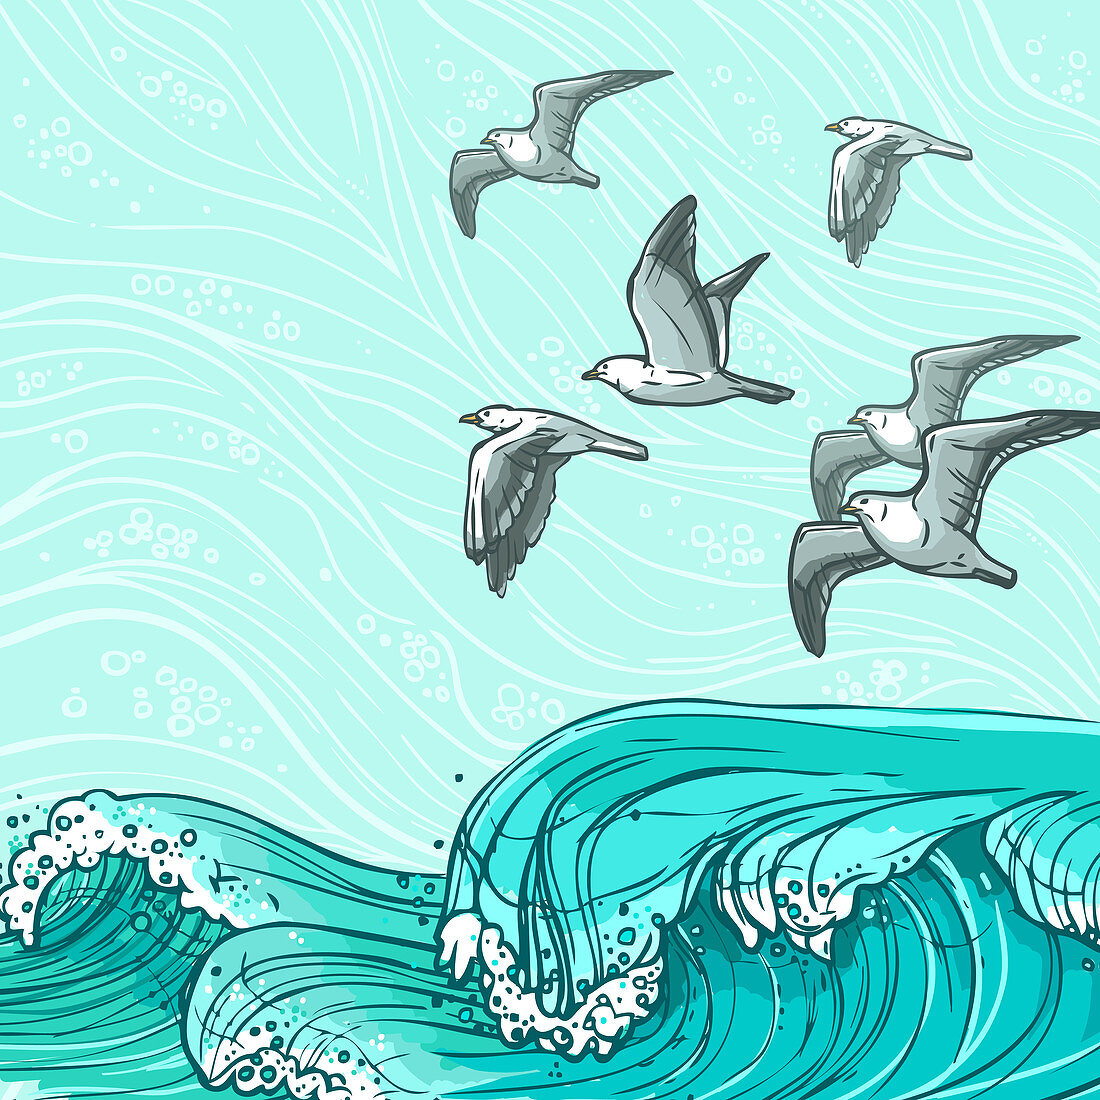 Ocean and sea gulls, illustration